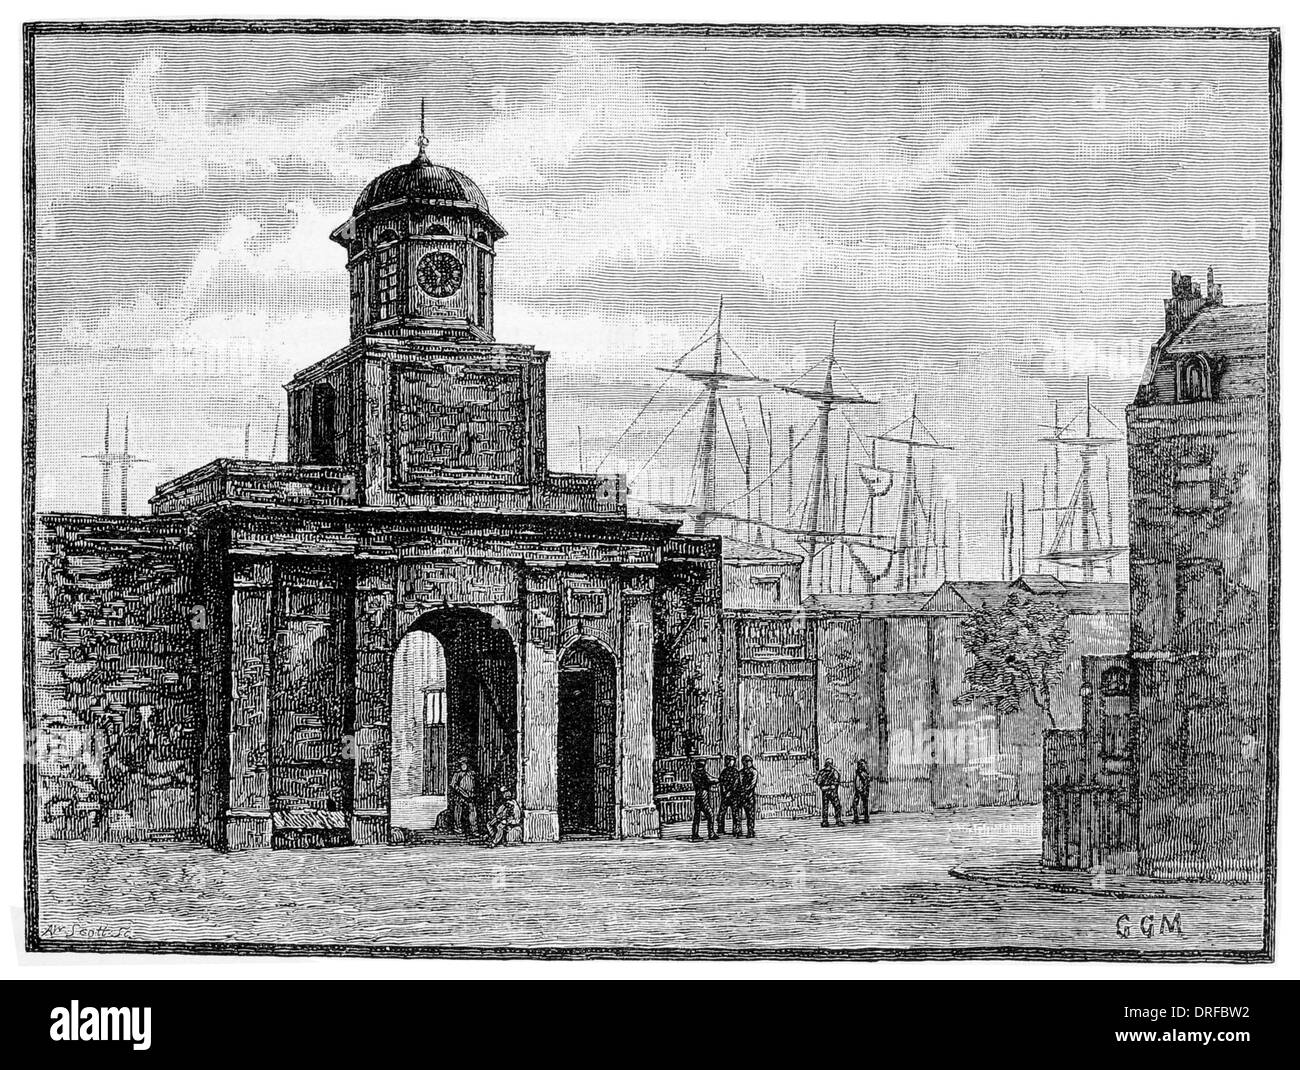 Entrance to the East India Docks Blackwall, east London circa 1880 ...